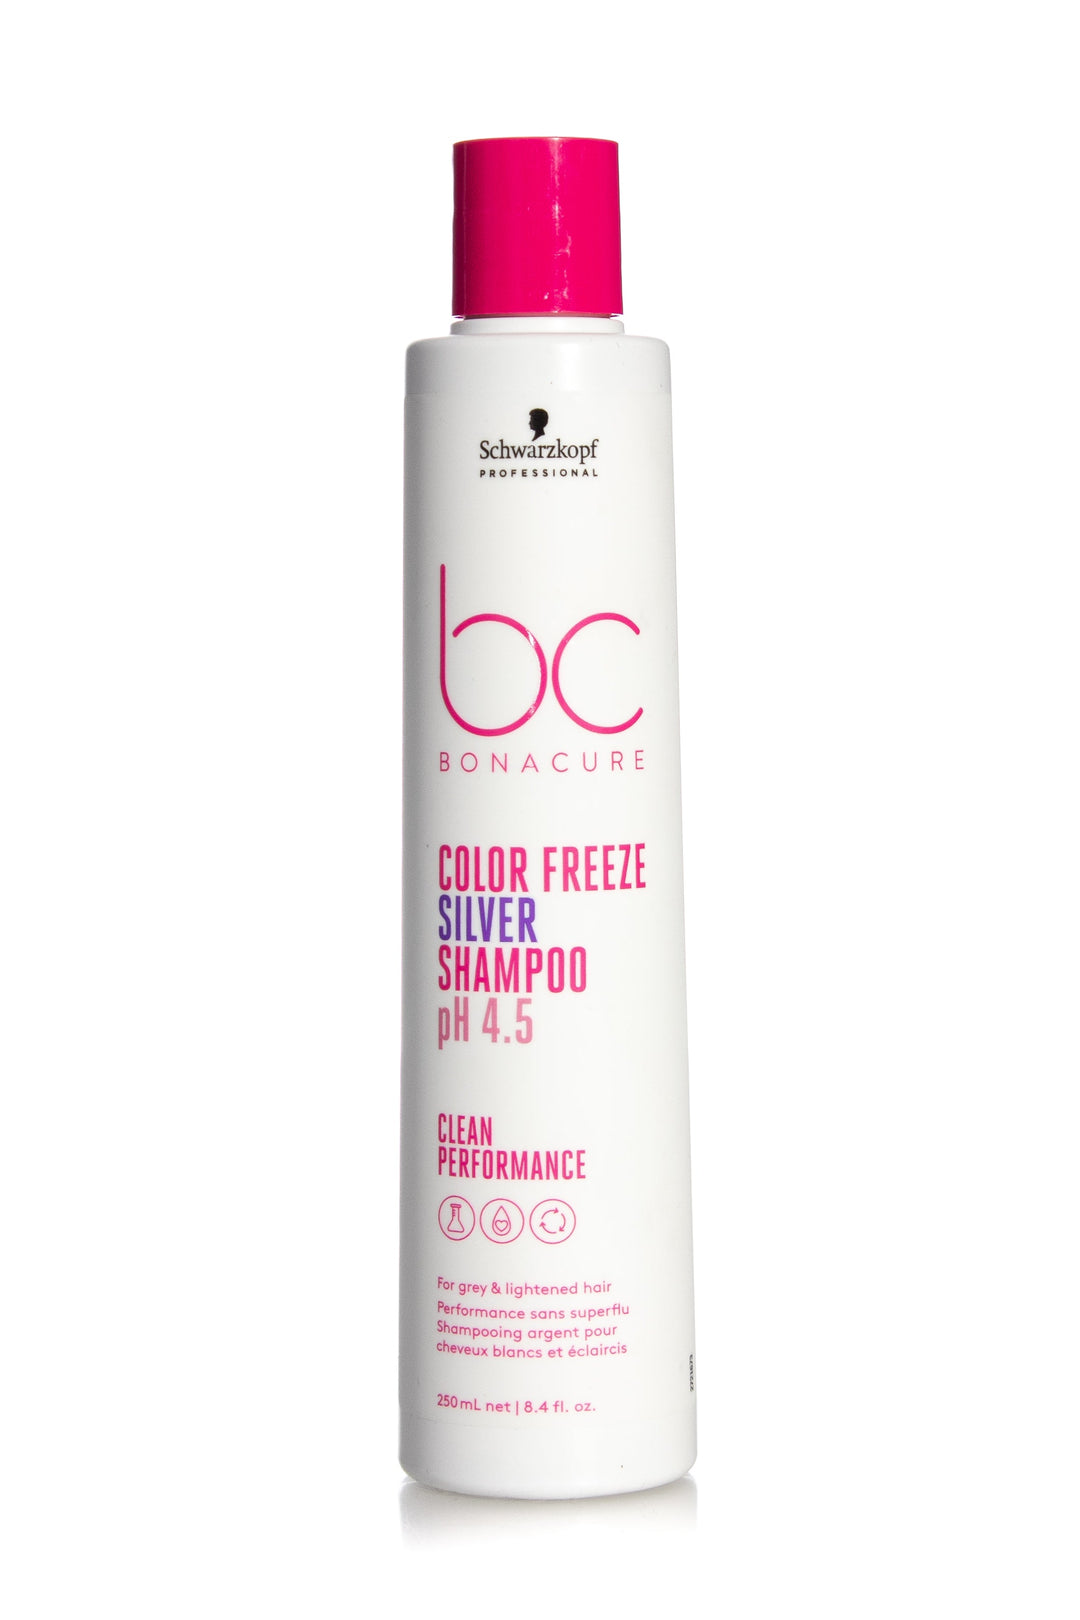 SCHWARZKOPF Bonacure Clean Performance Ph 4.5 Color Freeze Silver Shampoo | 250ml